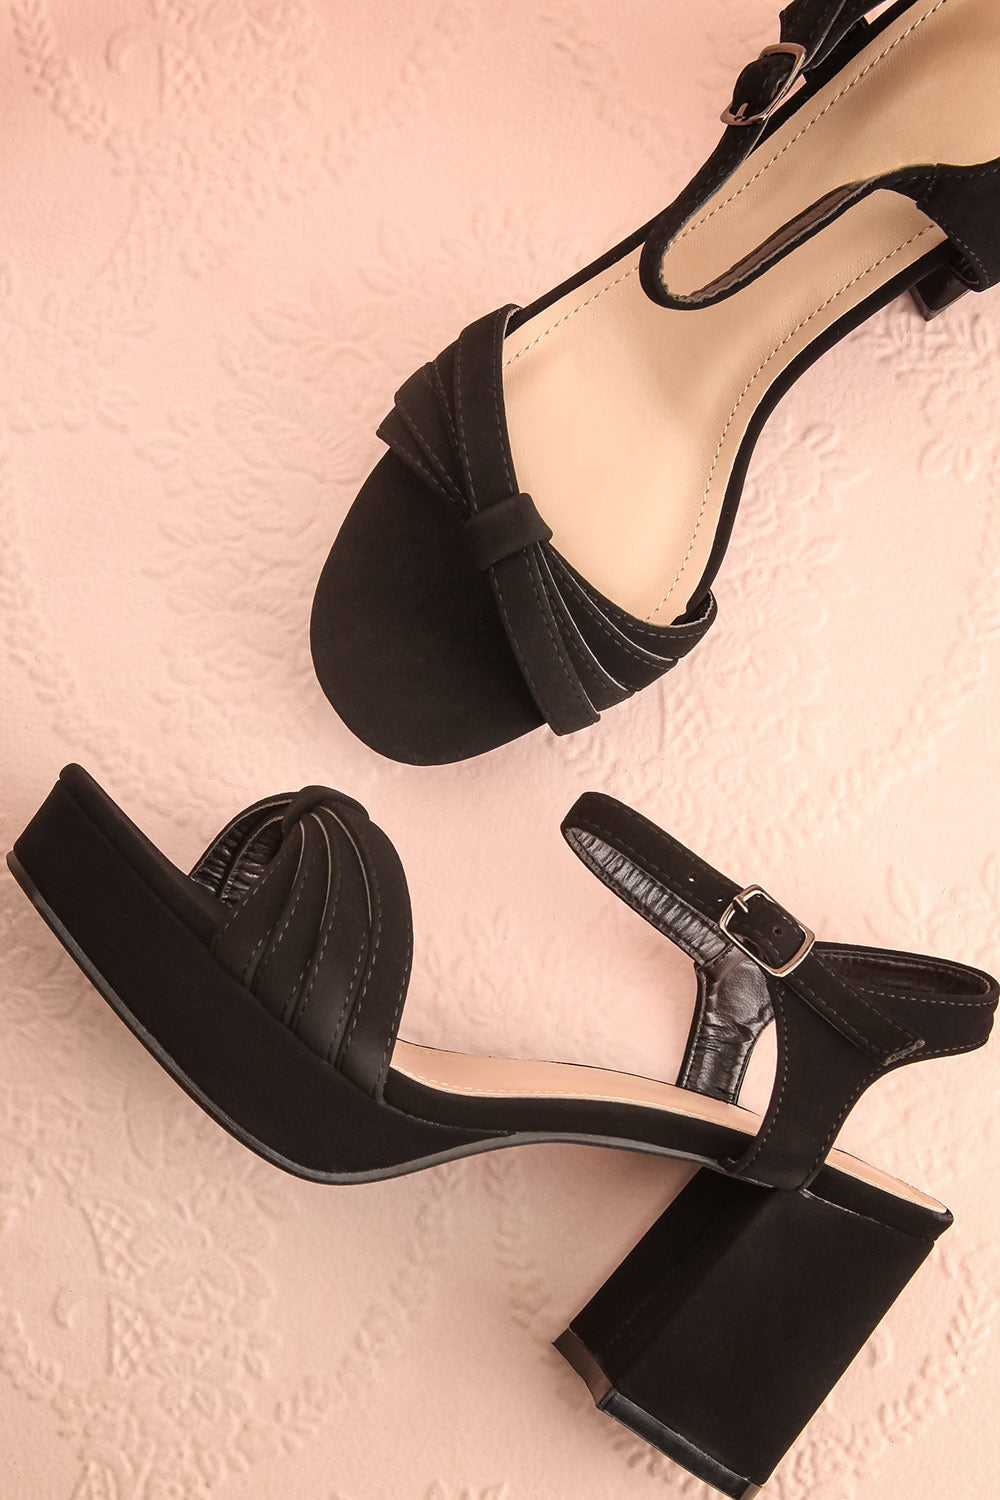 Idole Black | Pointed Toe Heels w/ Elastic Straps